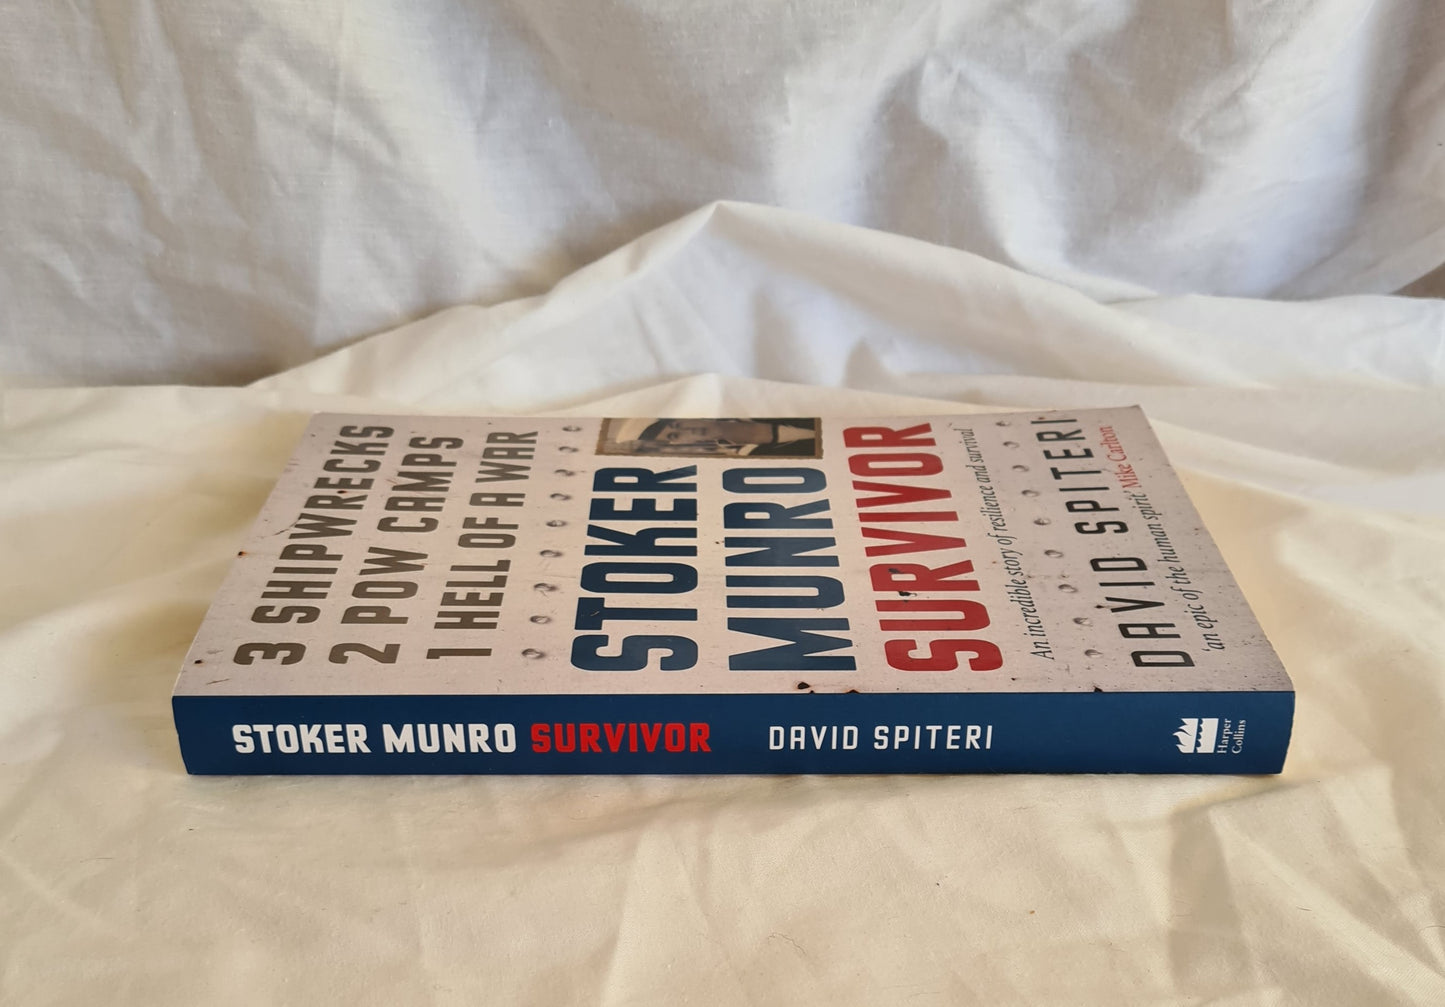 Stoker Munro Survivor by David Spiteri